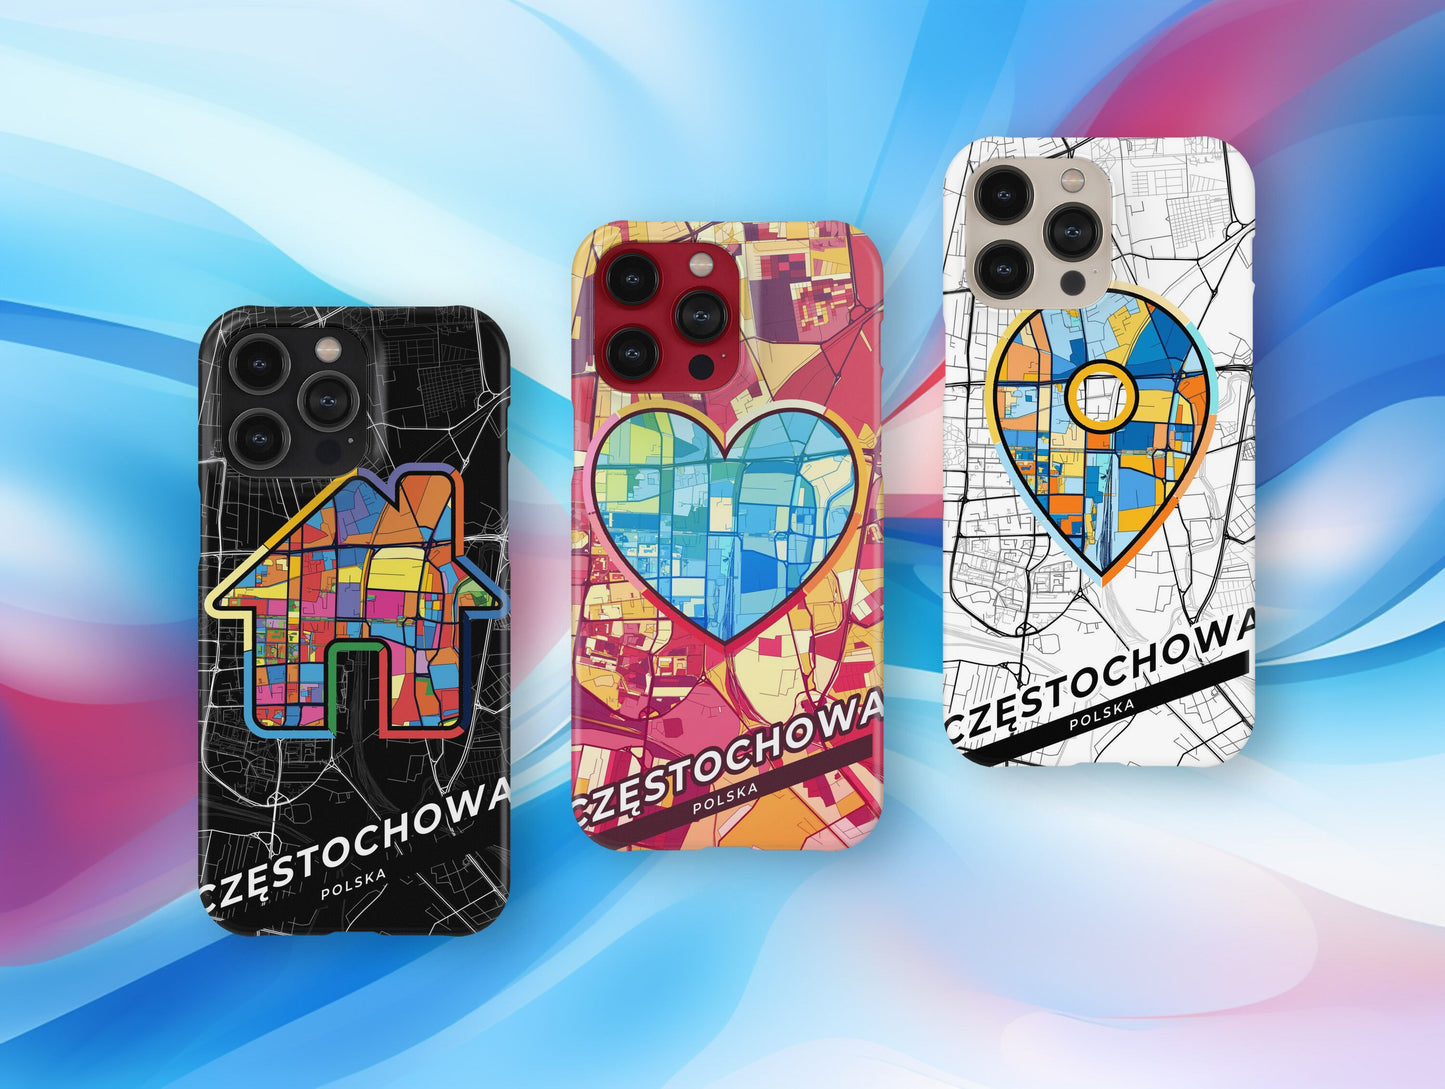 Częstochowa Poland slim phone case with colorful icon. Birthday, wedding or housewarming gift. Couple match cases.